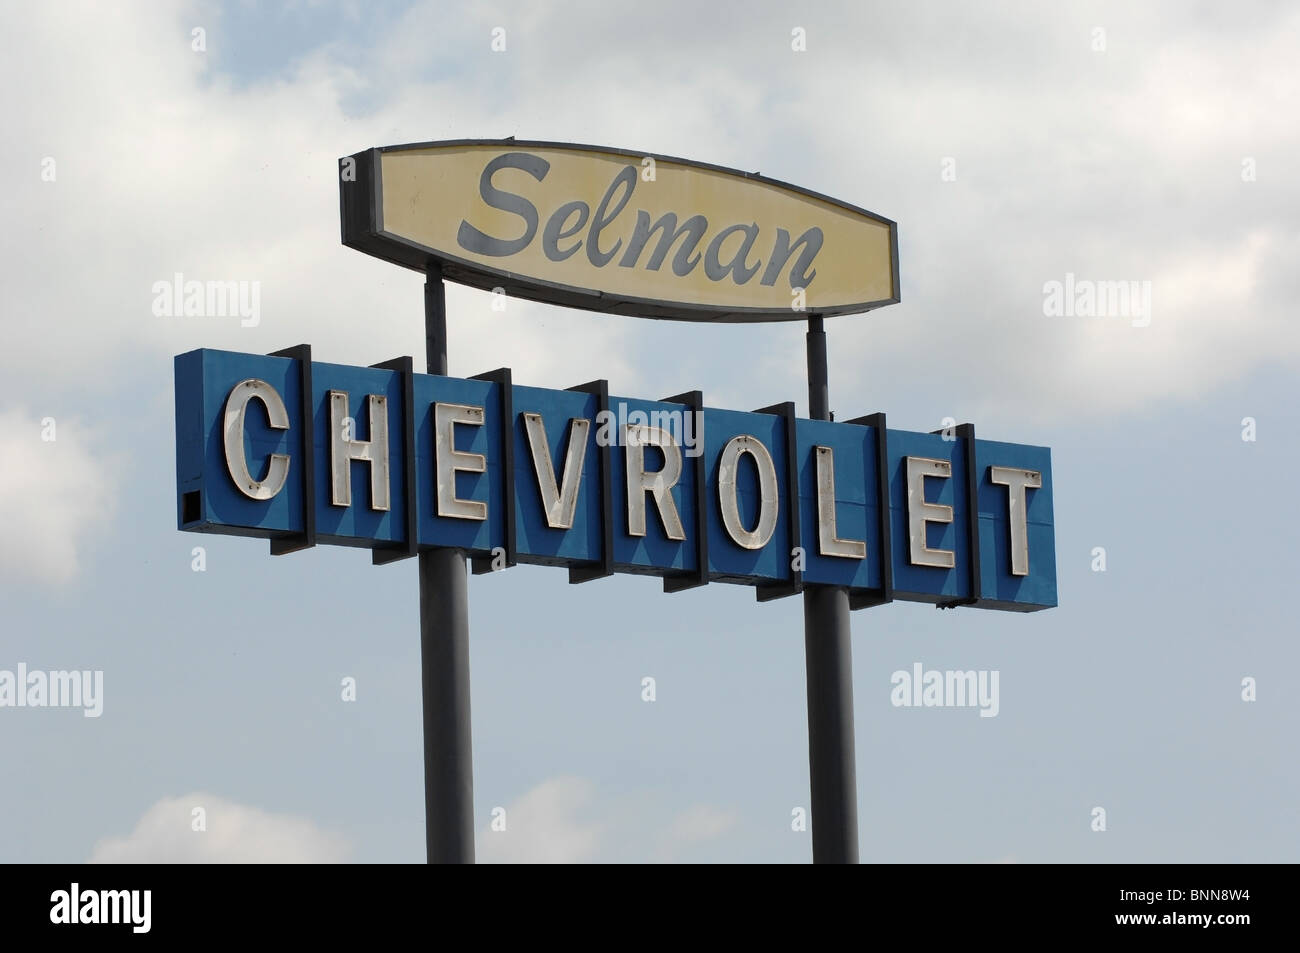 Selman Chevrolet in Orange, California, USA. Stock Photo